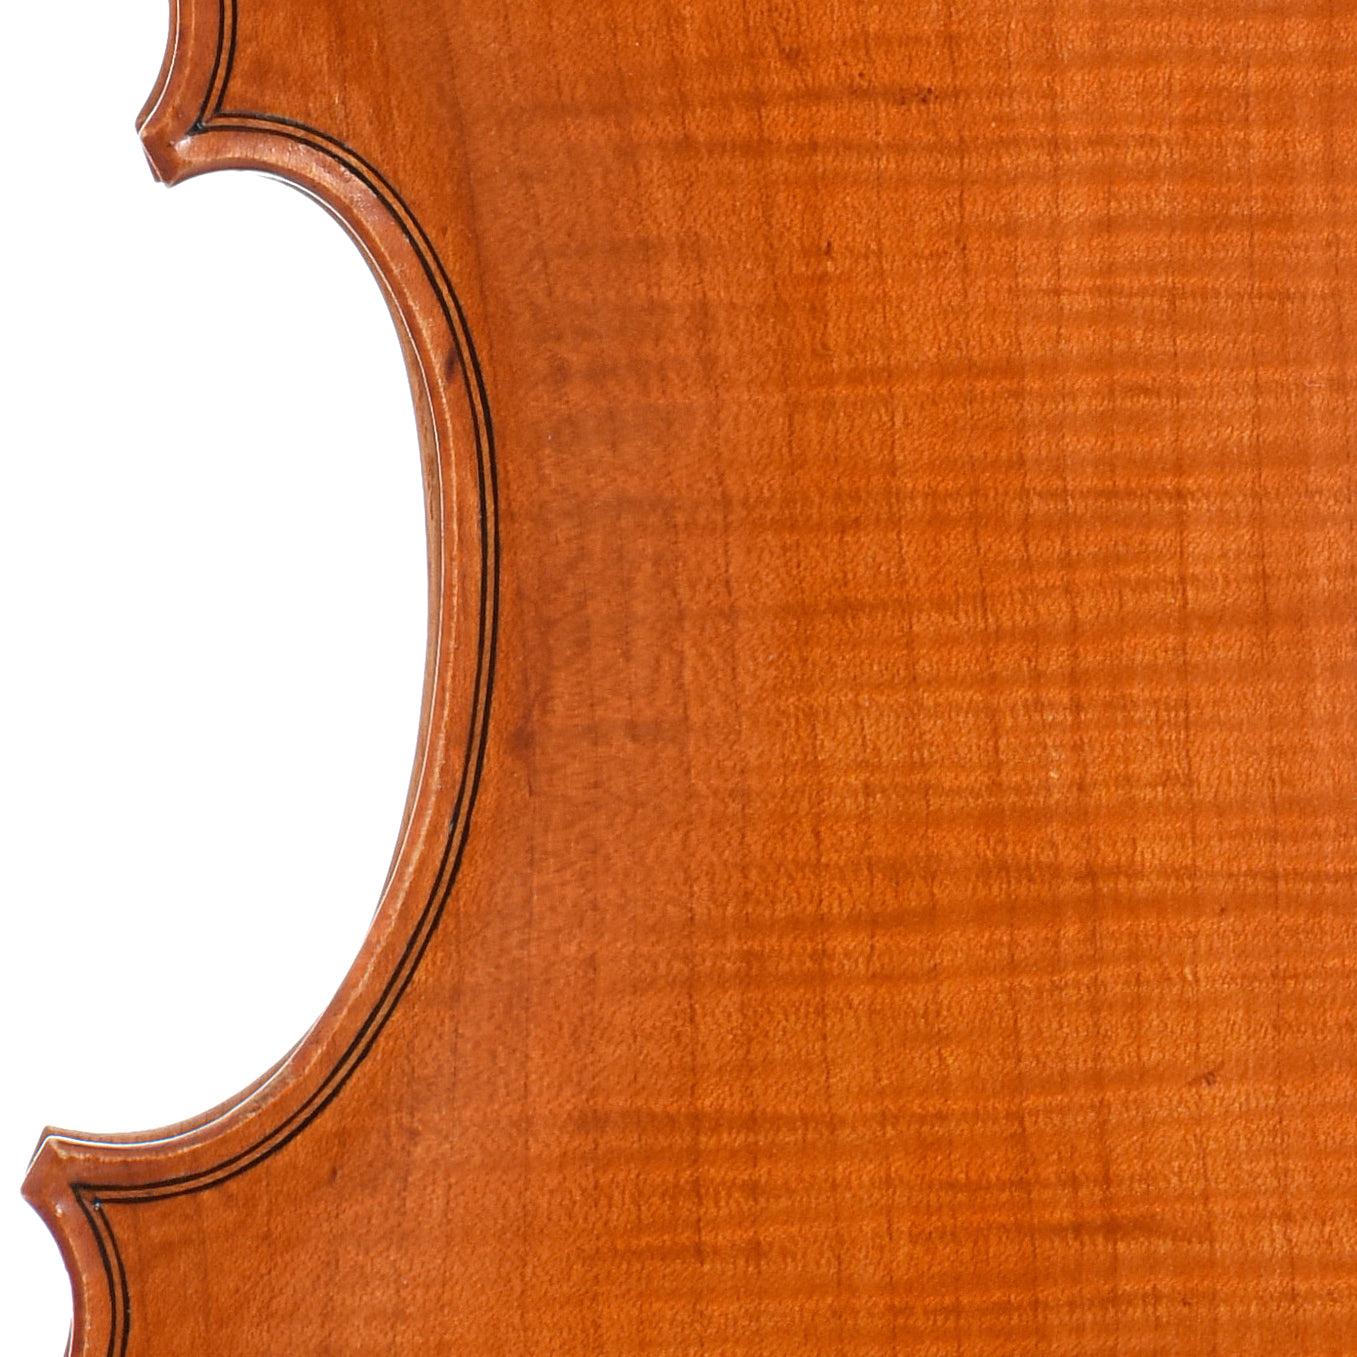 Back detail of Barry Dudley 5-String Violin (2010)